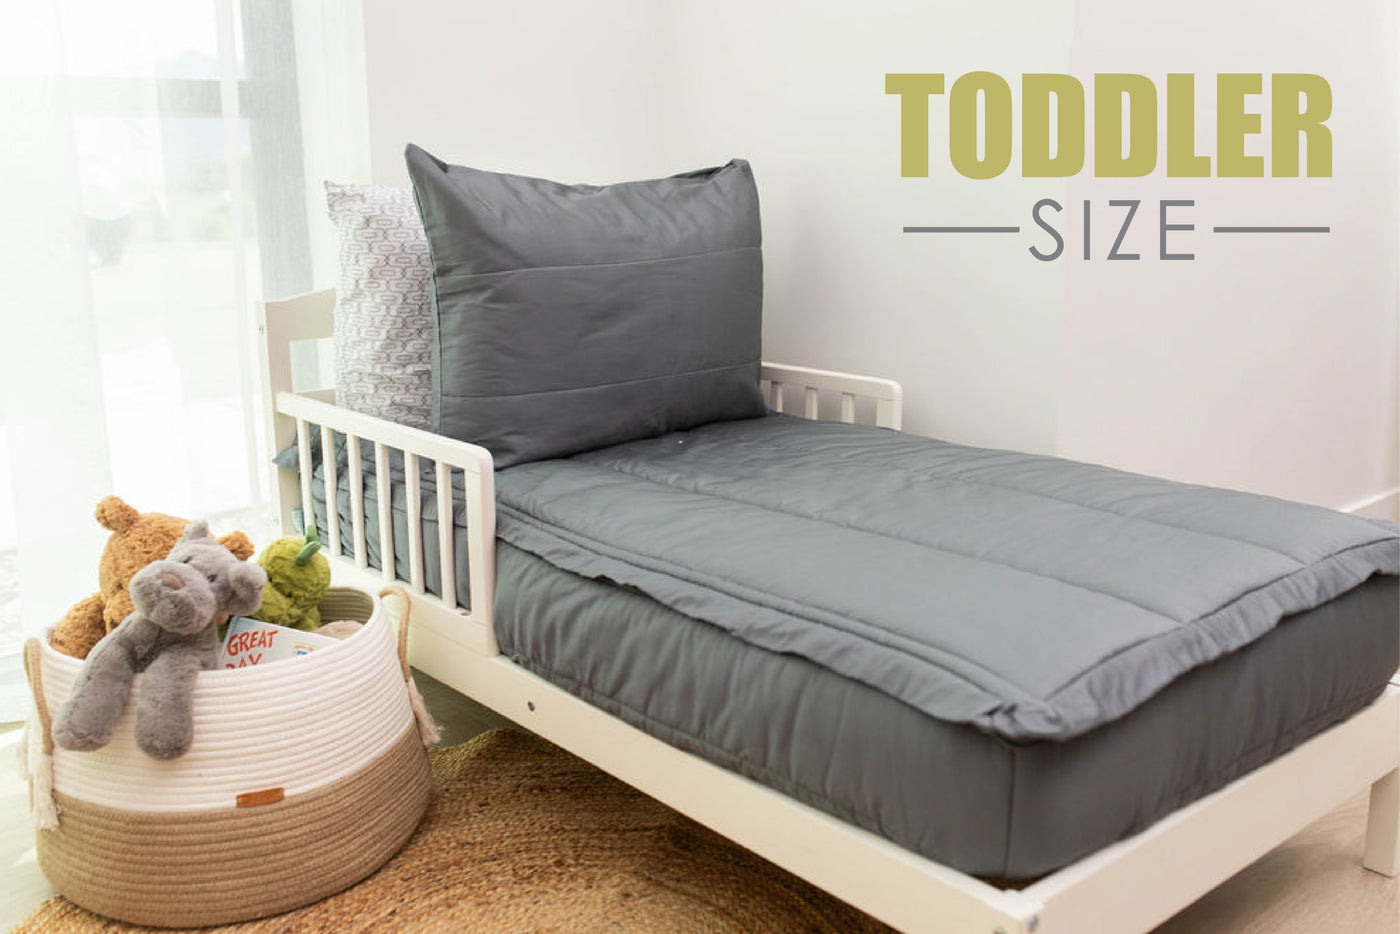 Gray toddler sized zipper bedding 